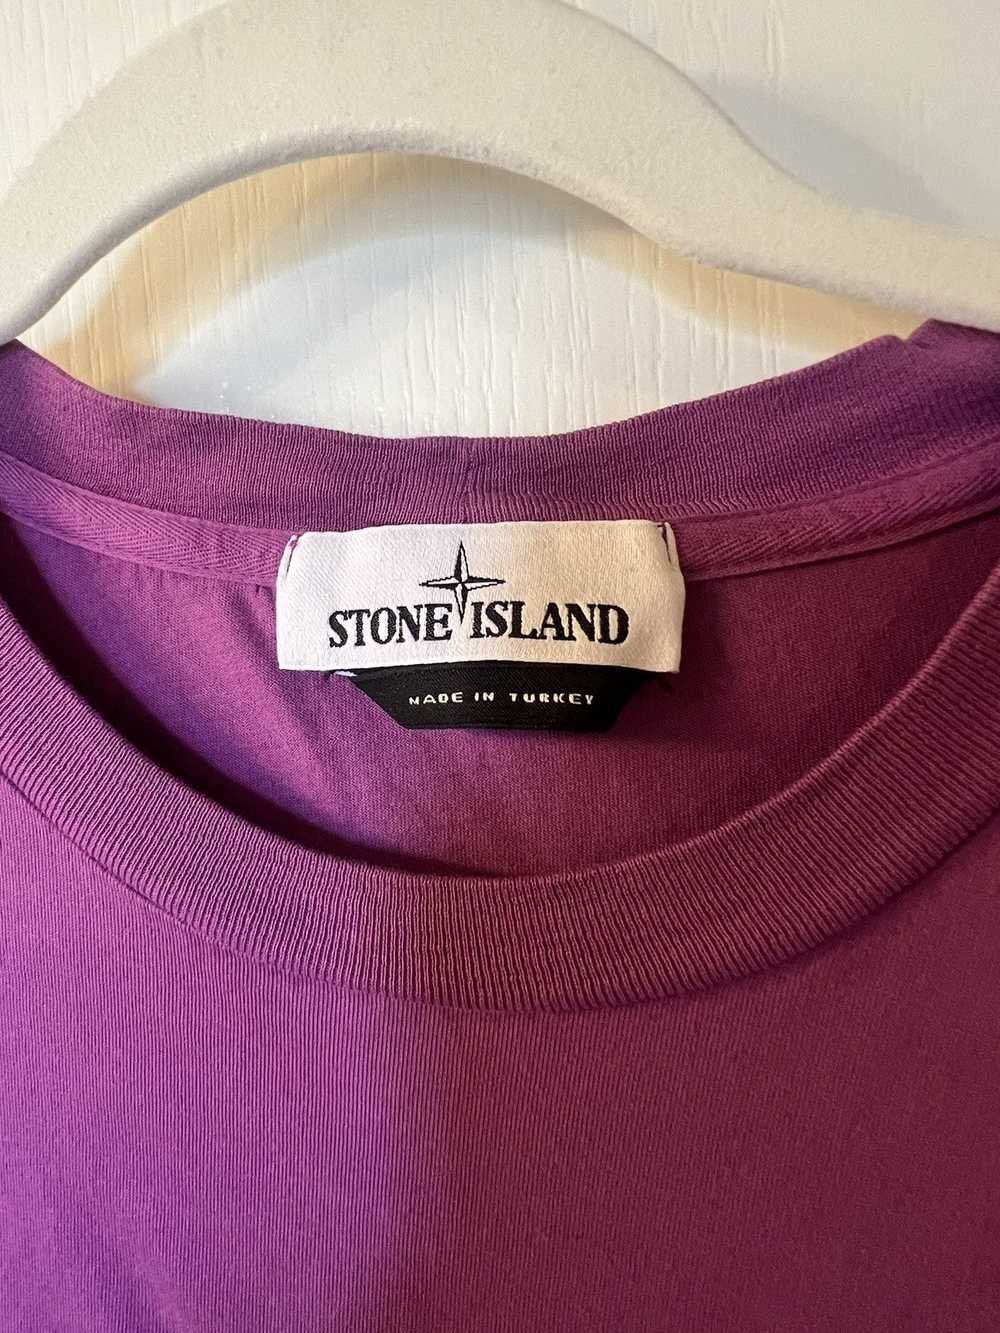 Stone Island Stone Island Longsleeve Tee - image 4